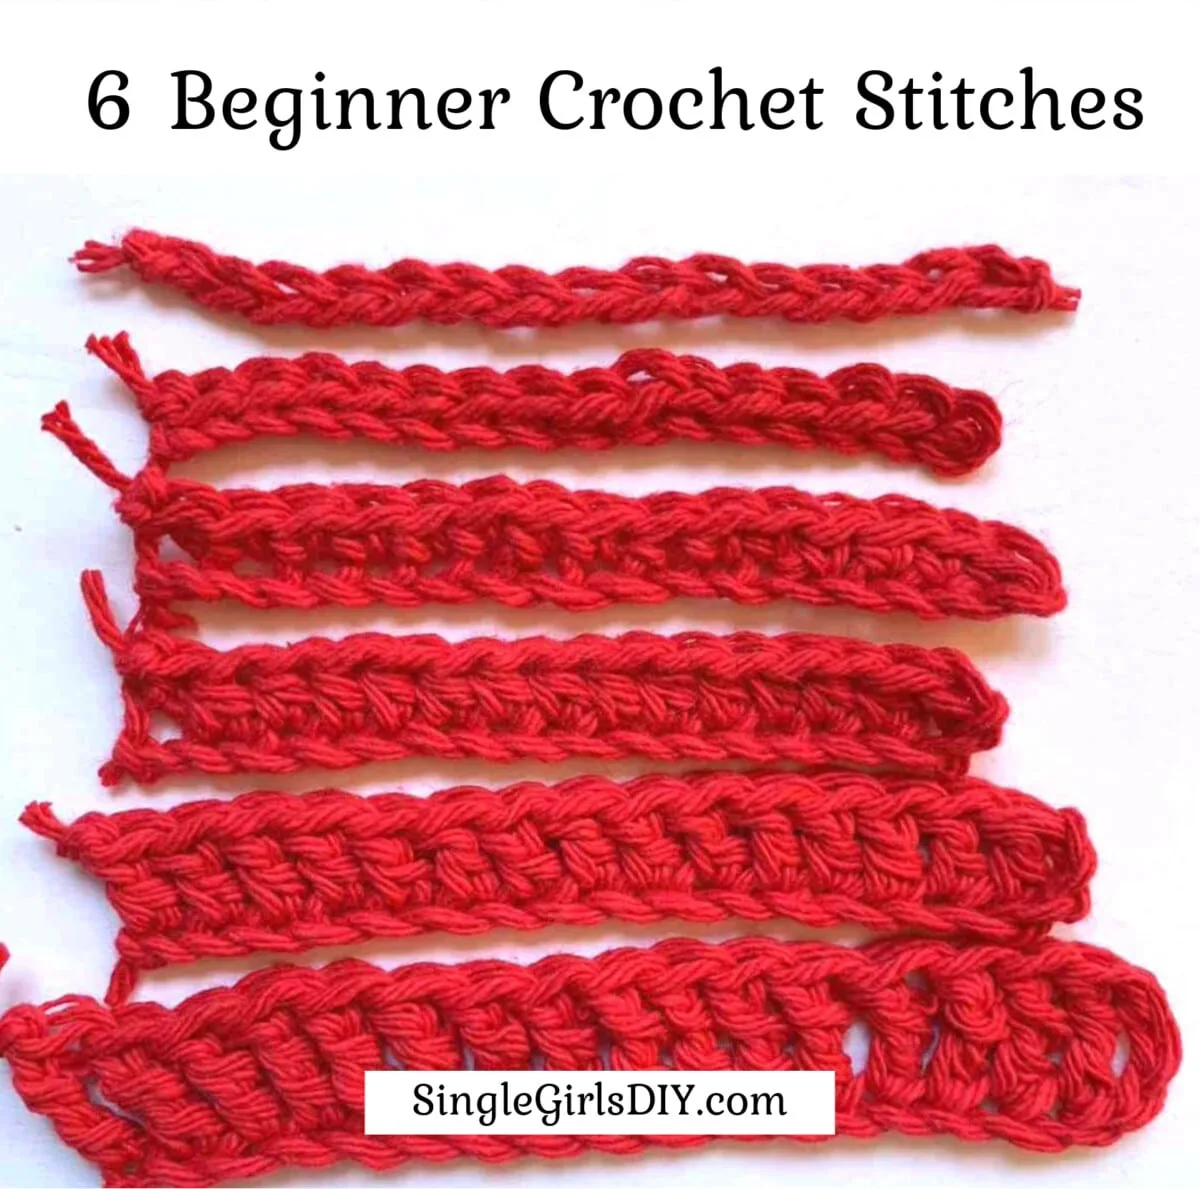 Essential Crochet Supplies for Beginners {FREE Checklist} - A BOX